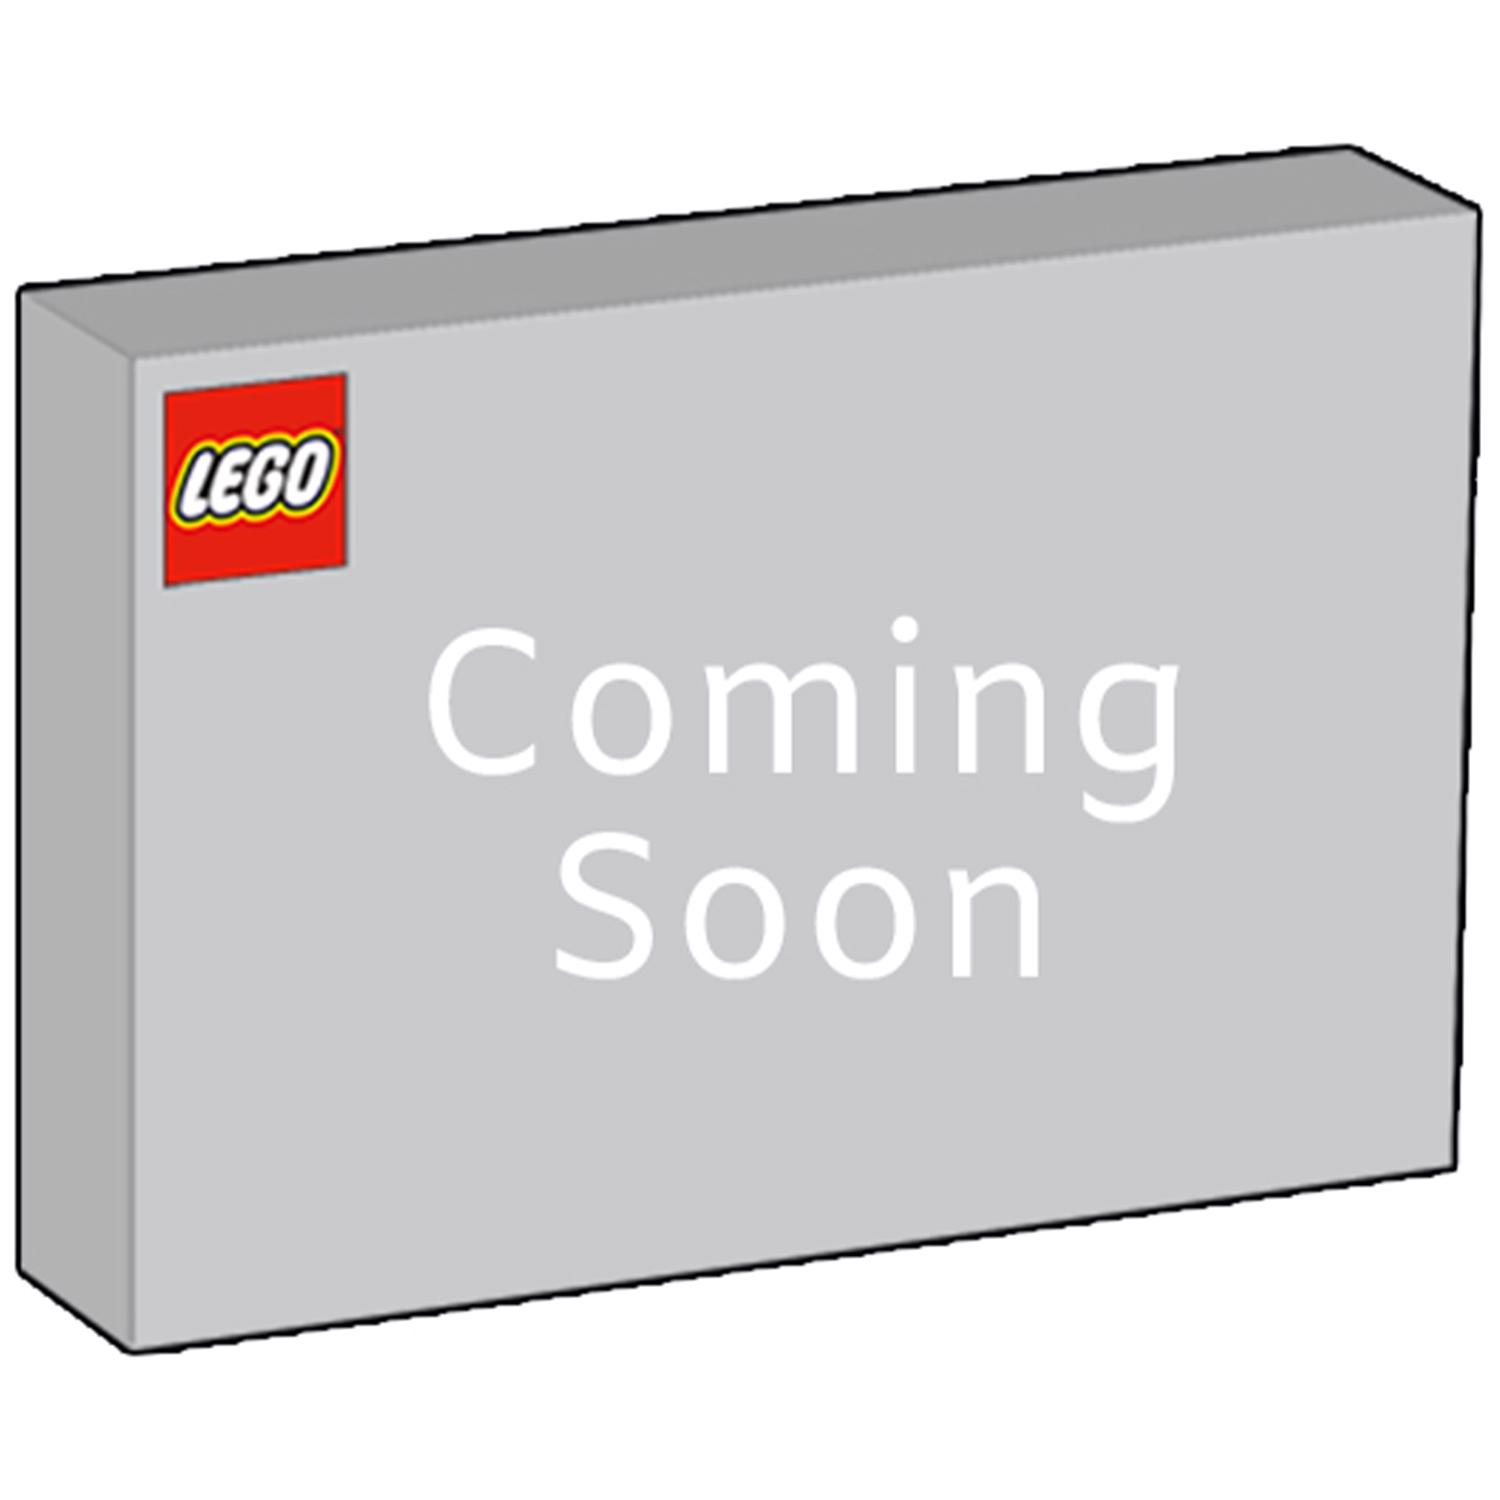 LEGO® Speed Champions 76911 007 Aston Martin DB5 V39, 298 pc